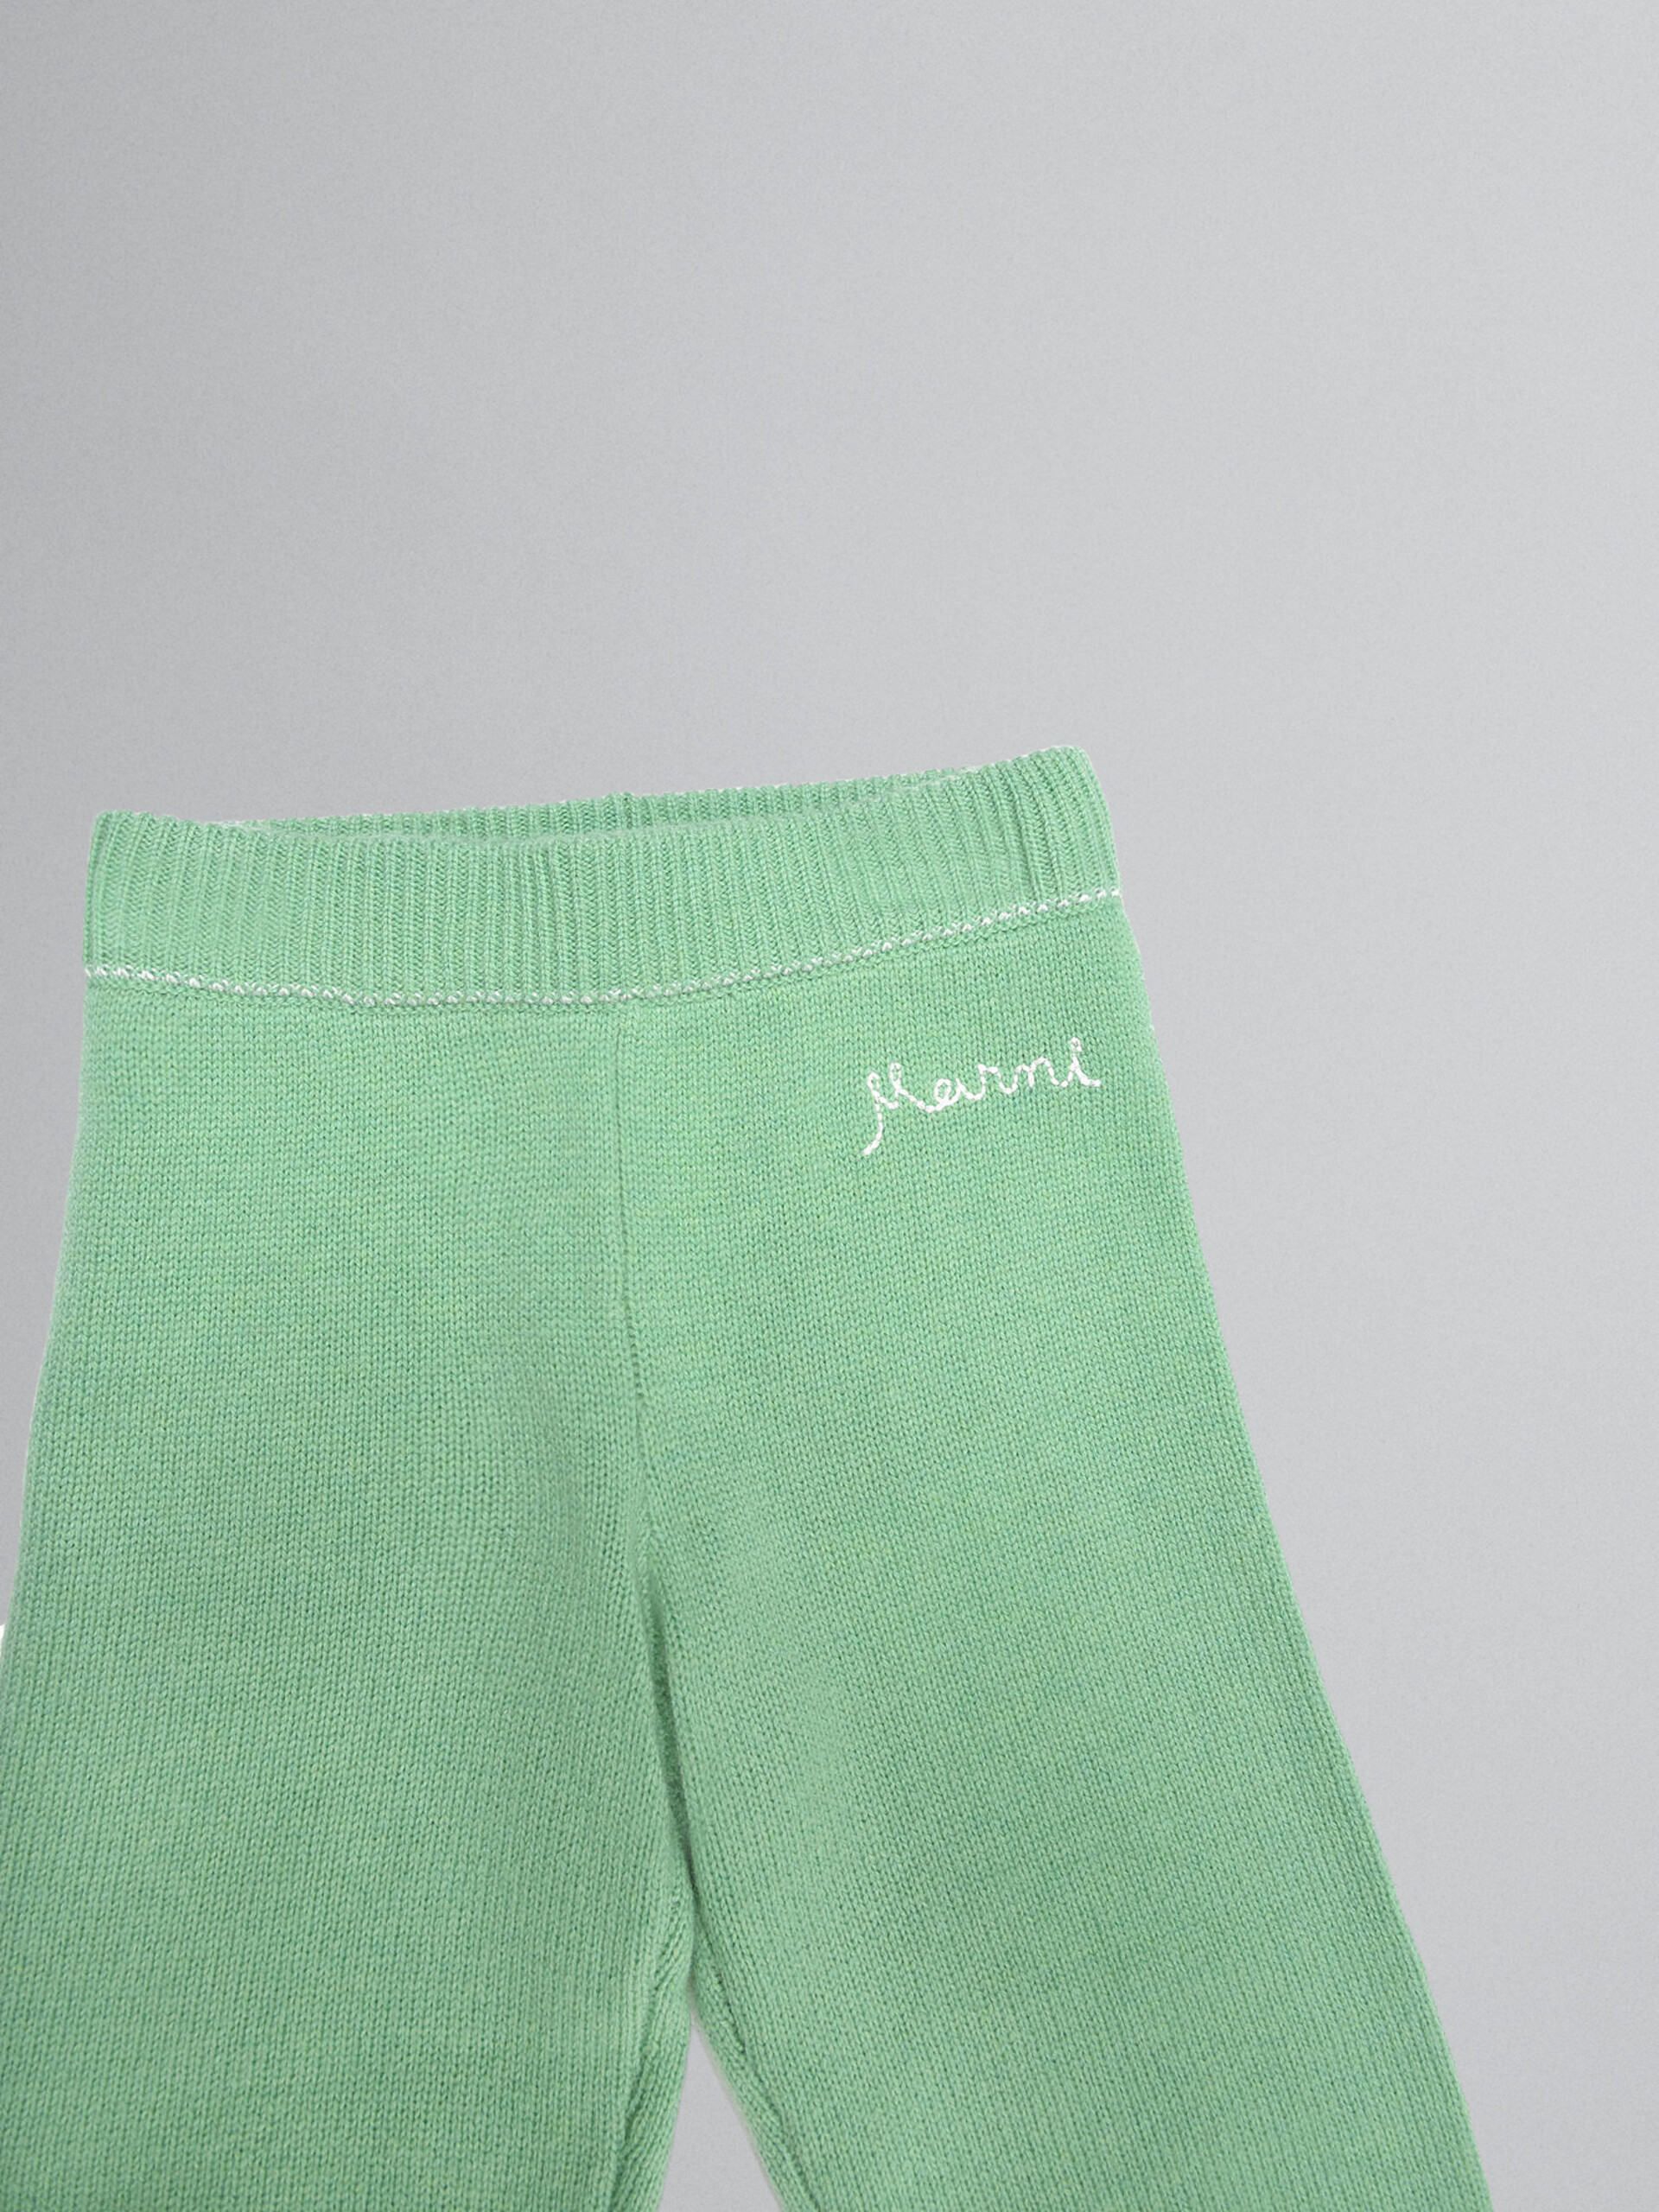 Green cashmere blend pants - Pants - Image 3